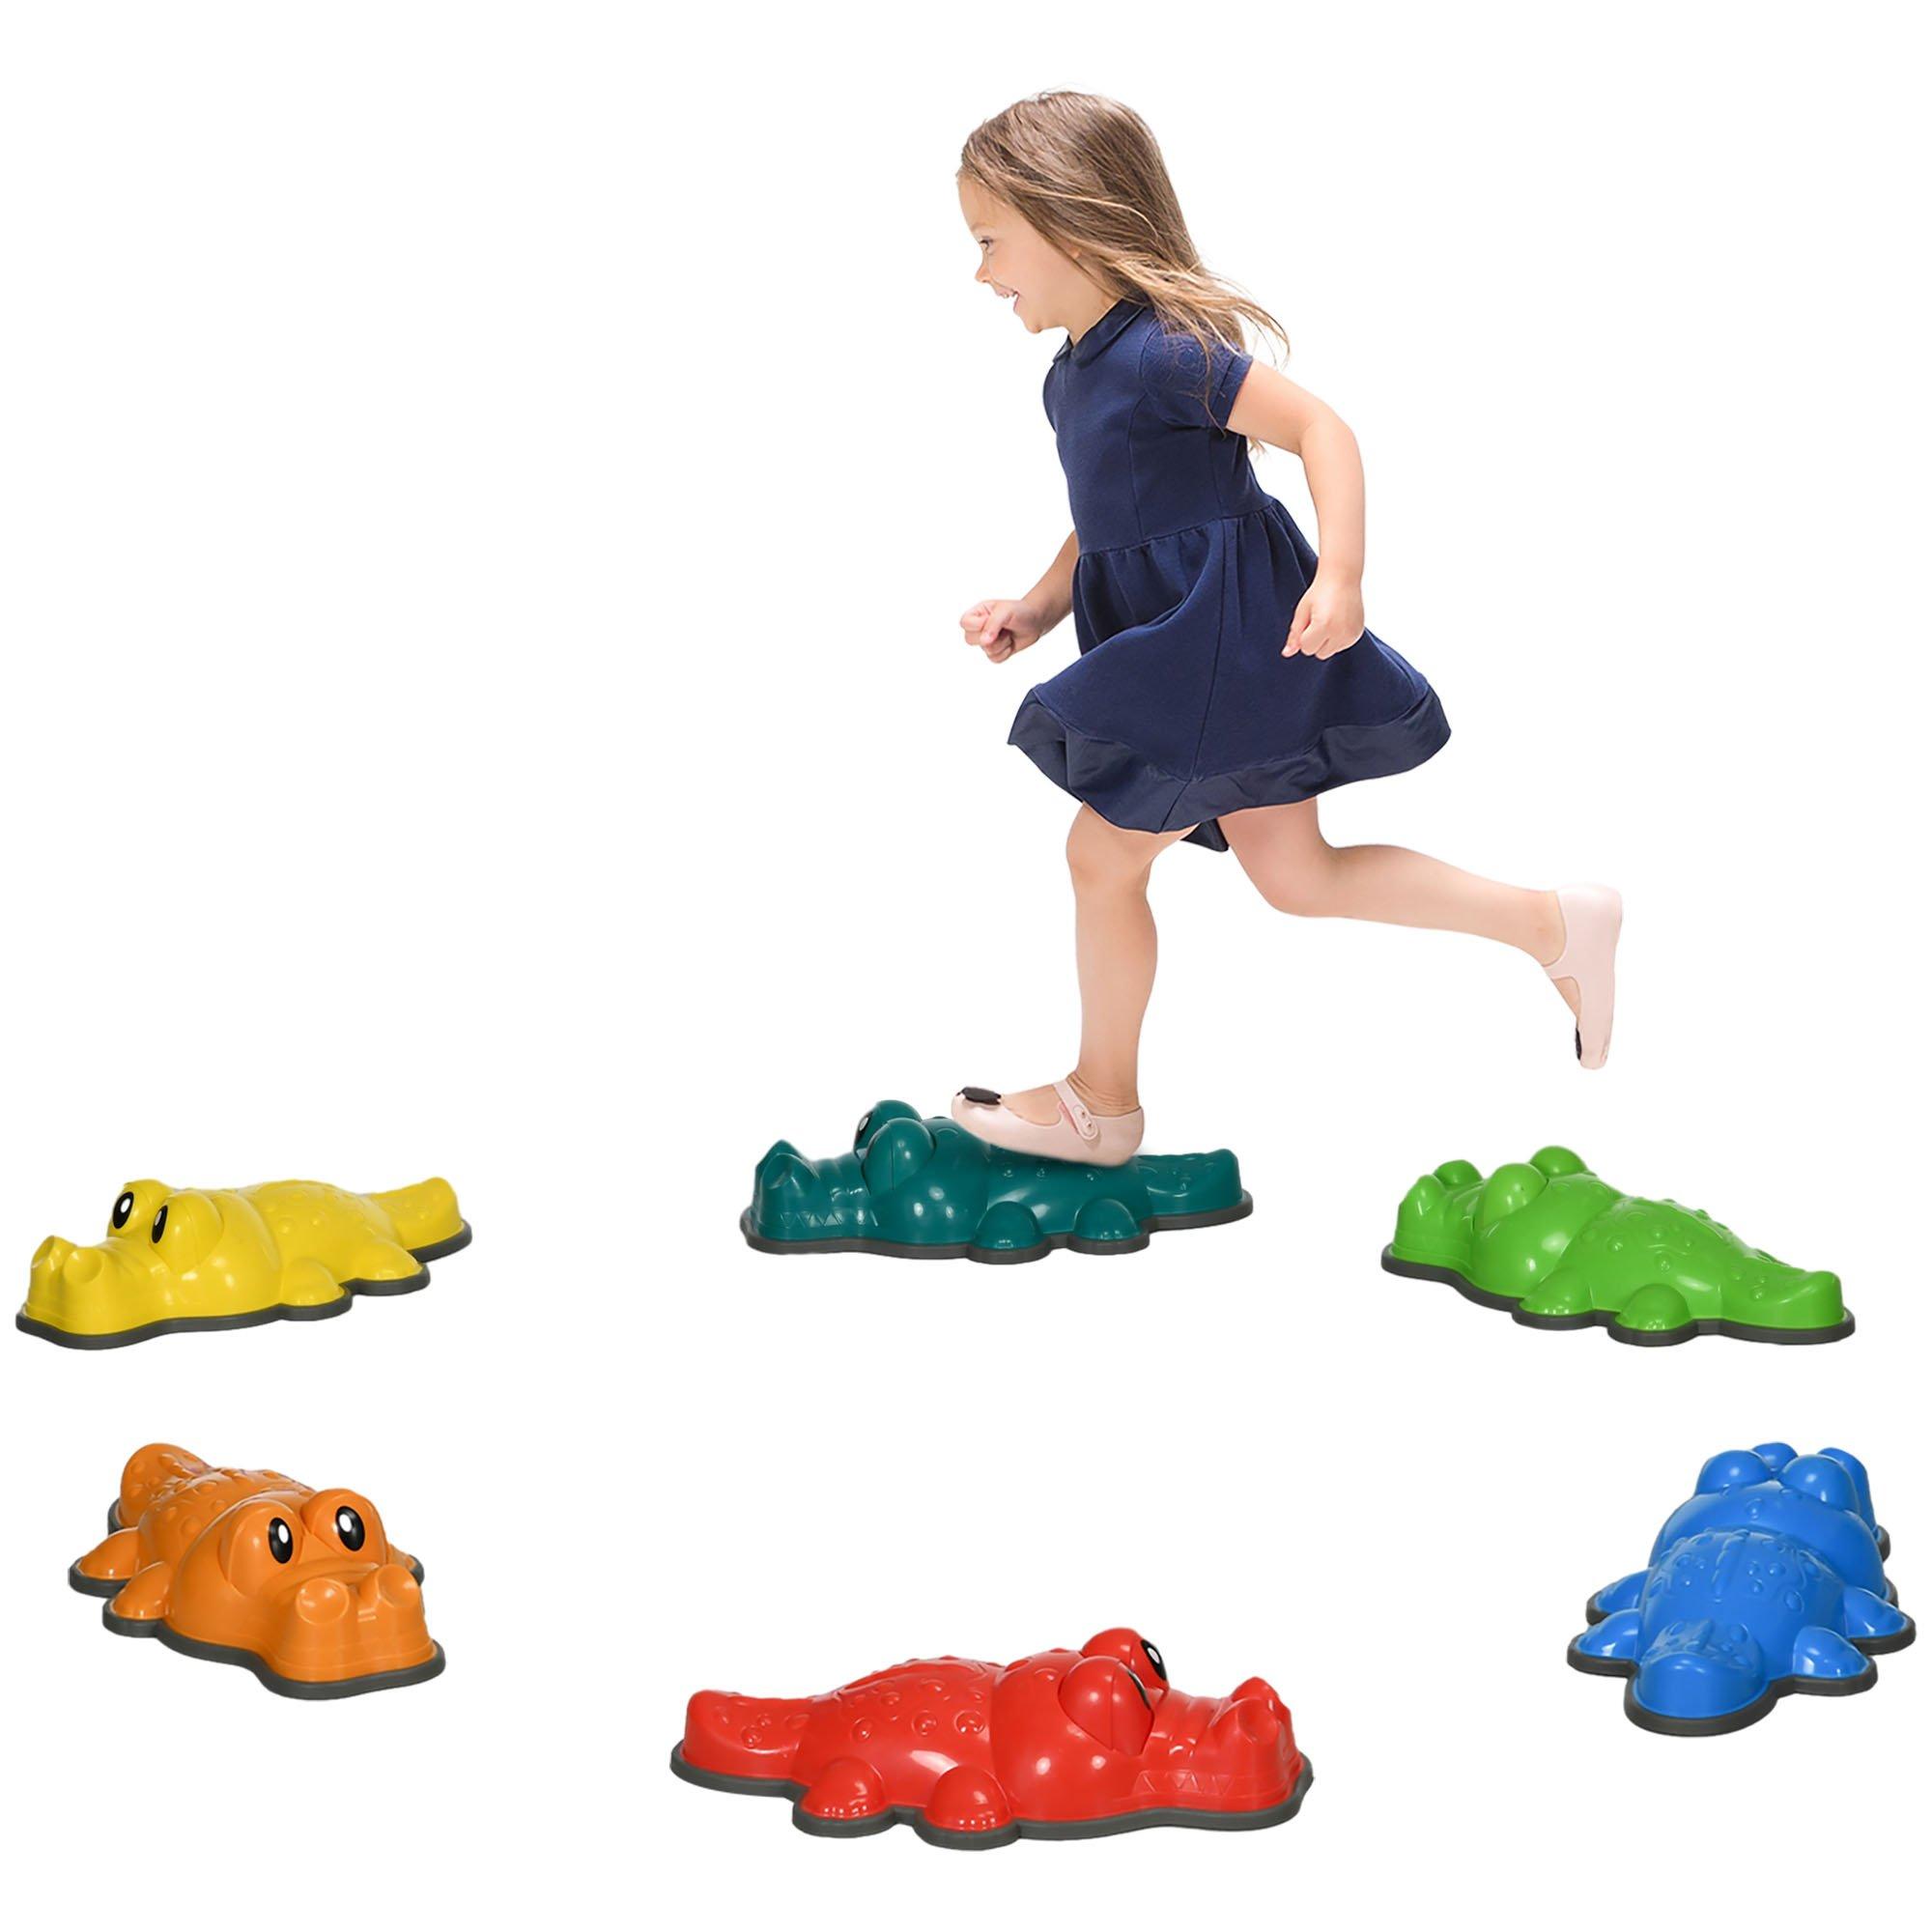 ZONEKIZ 6PCs Kids Kids Stepping Stones with Anti-Slip Edge, Indoor and Outdoor